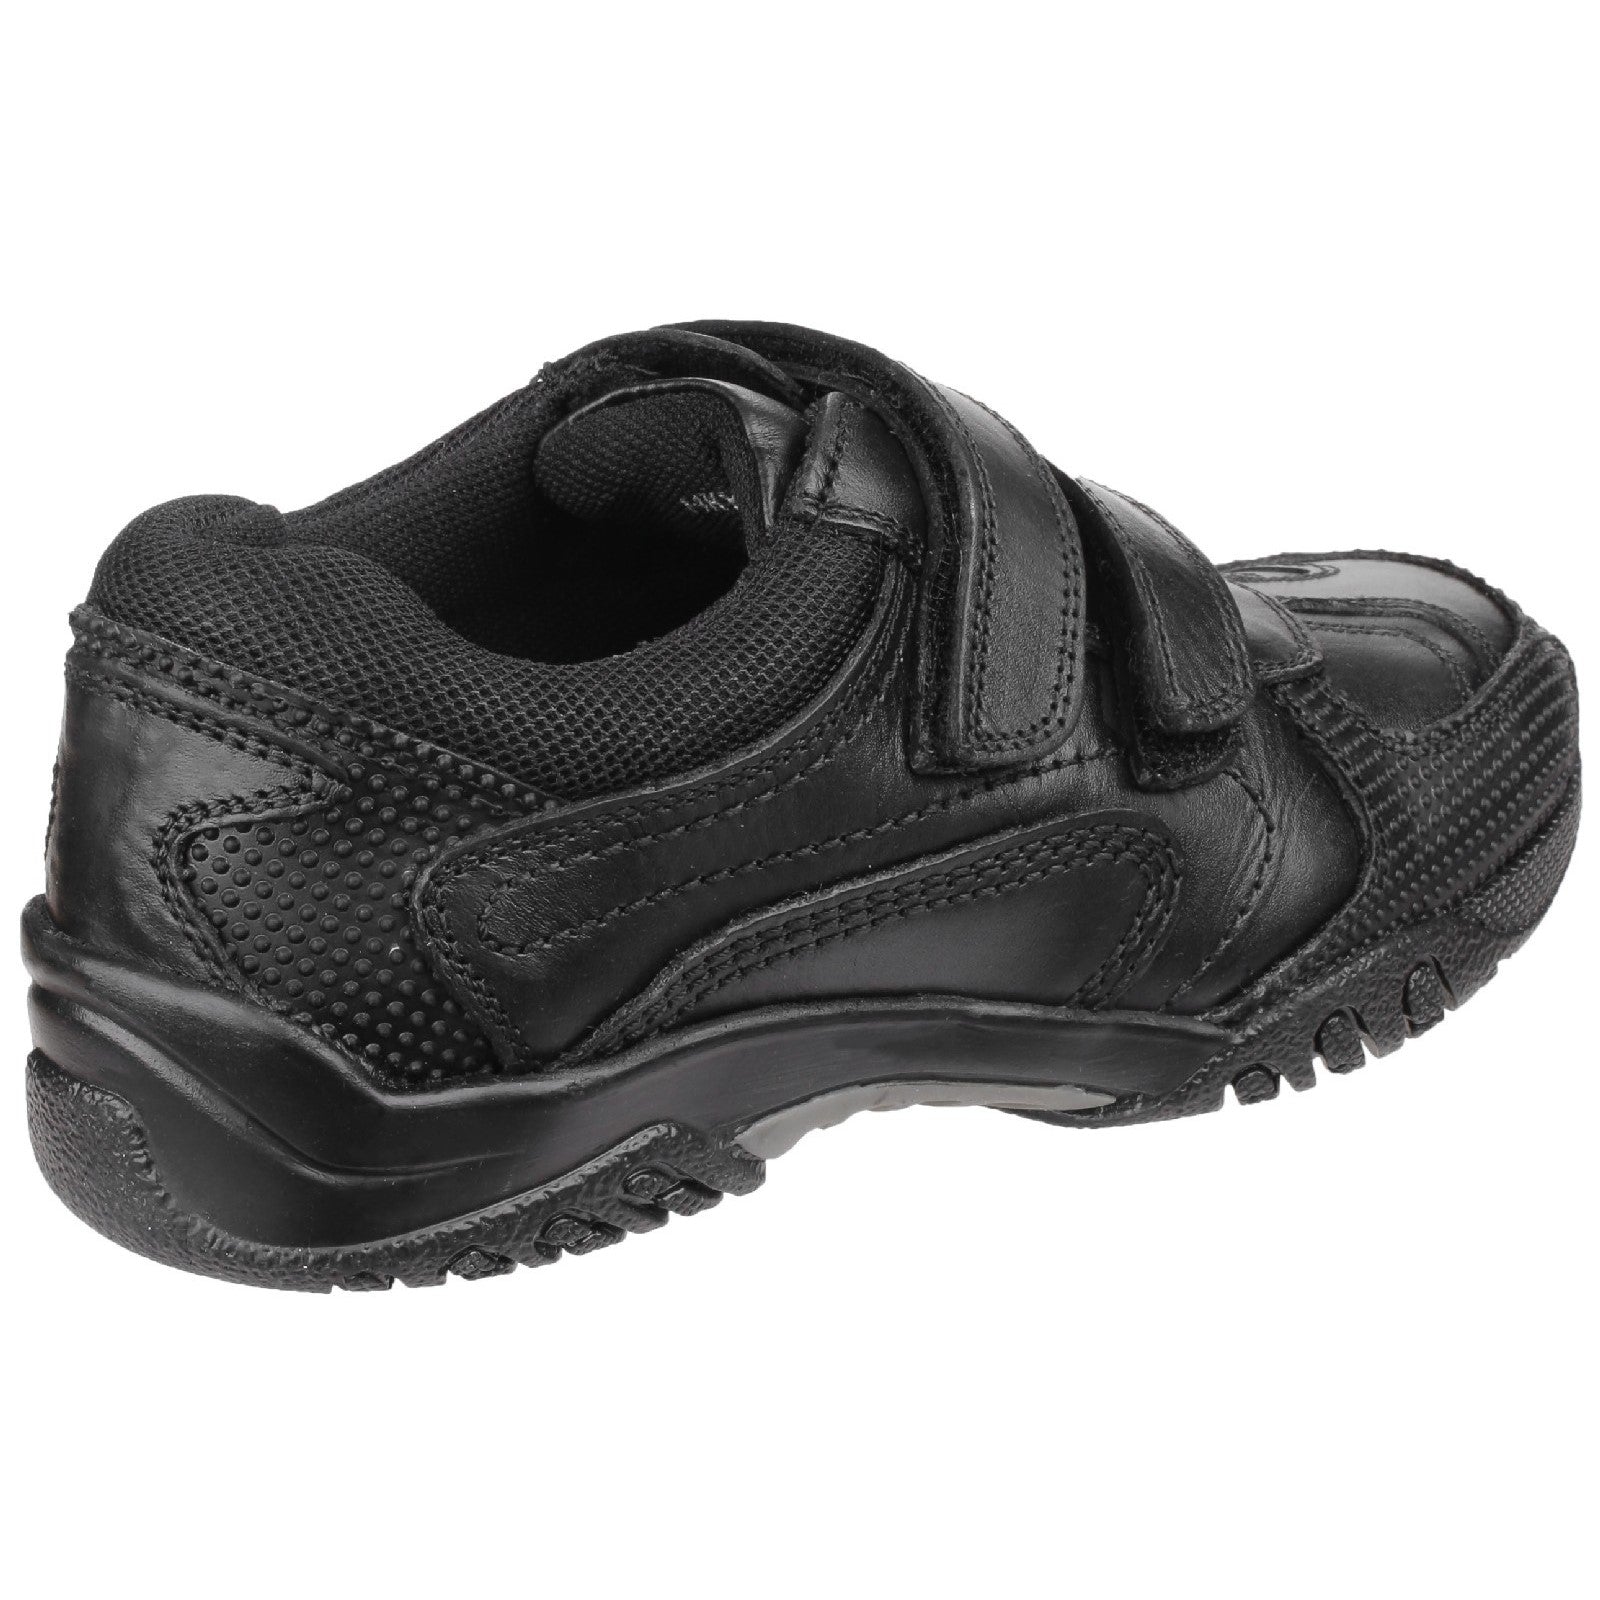 Hush Puppies Boys Jezza Leather School Shoes - Black